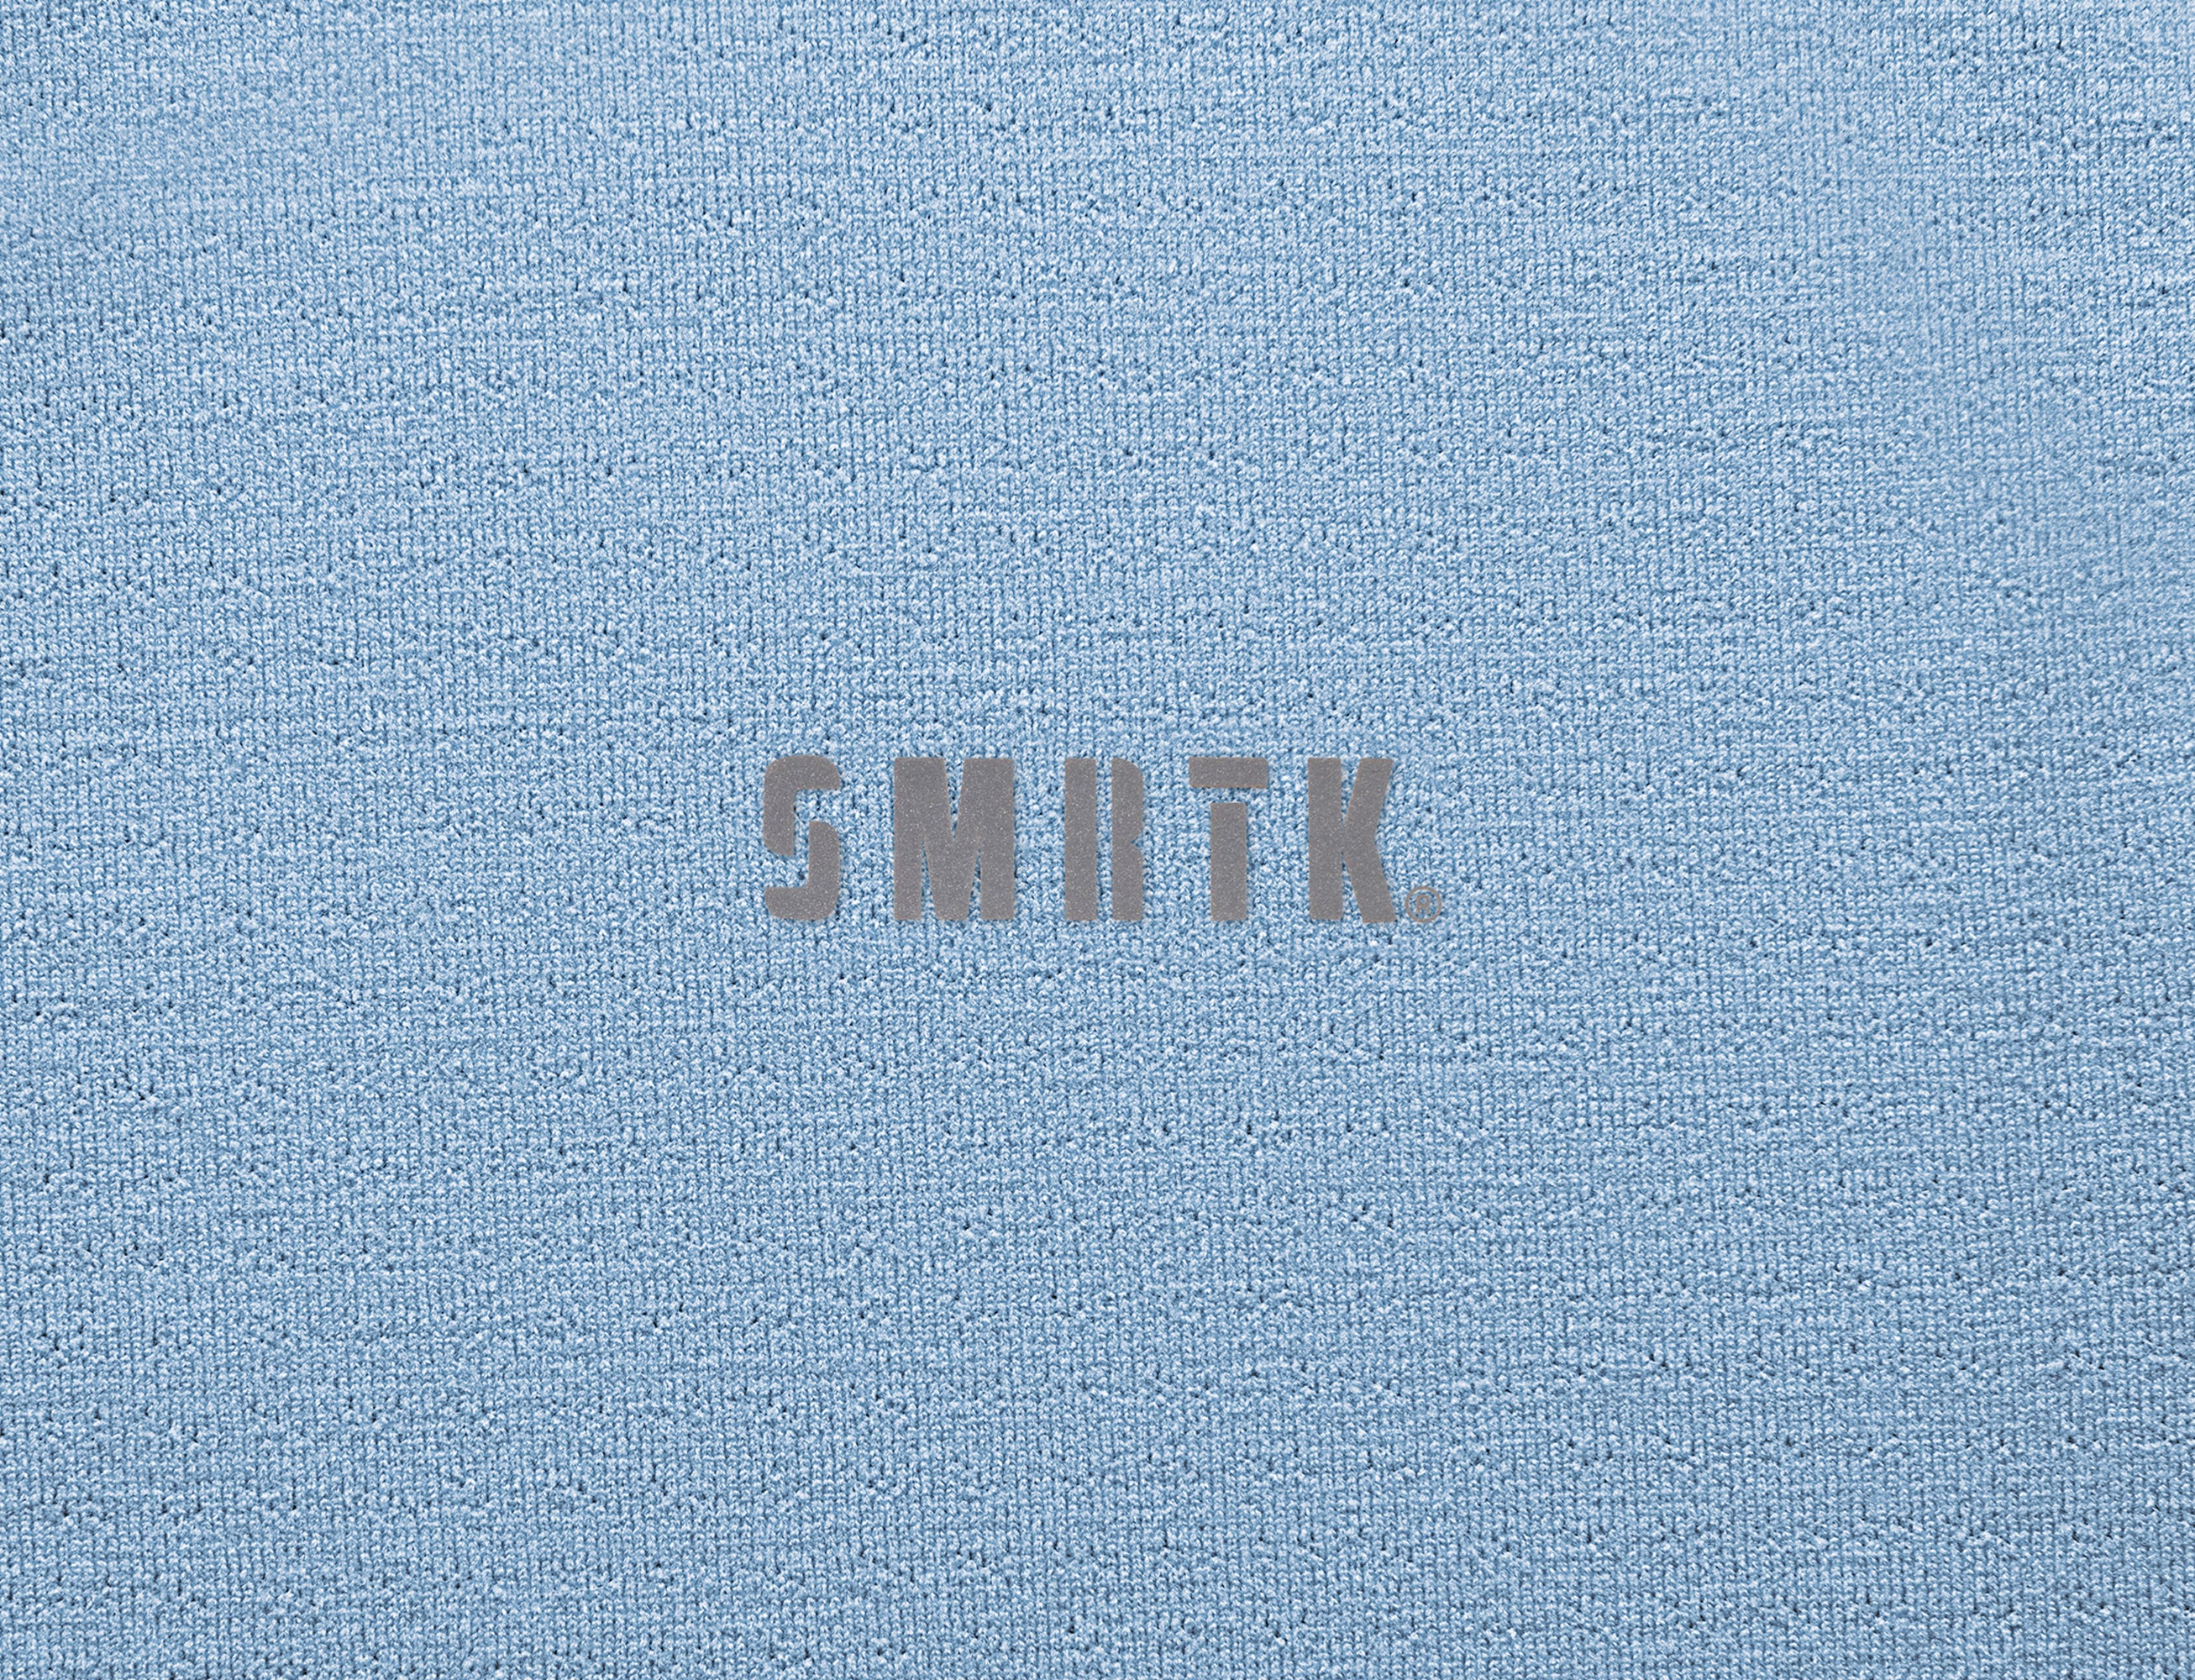 SMRTK Short Sleeve Performance Tee (3 pack)